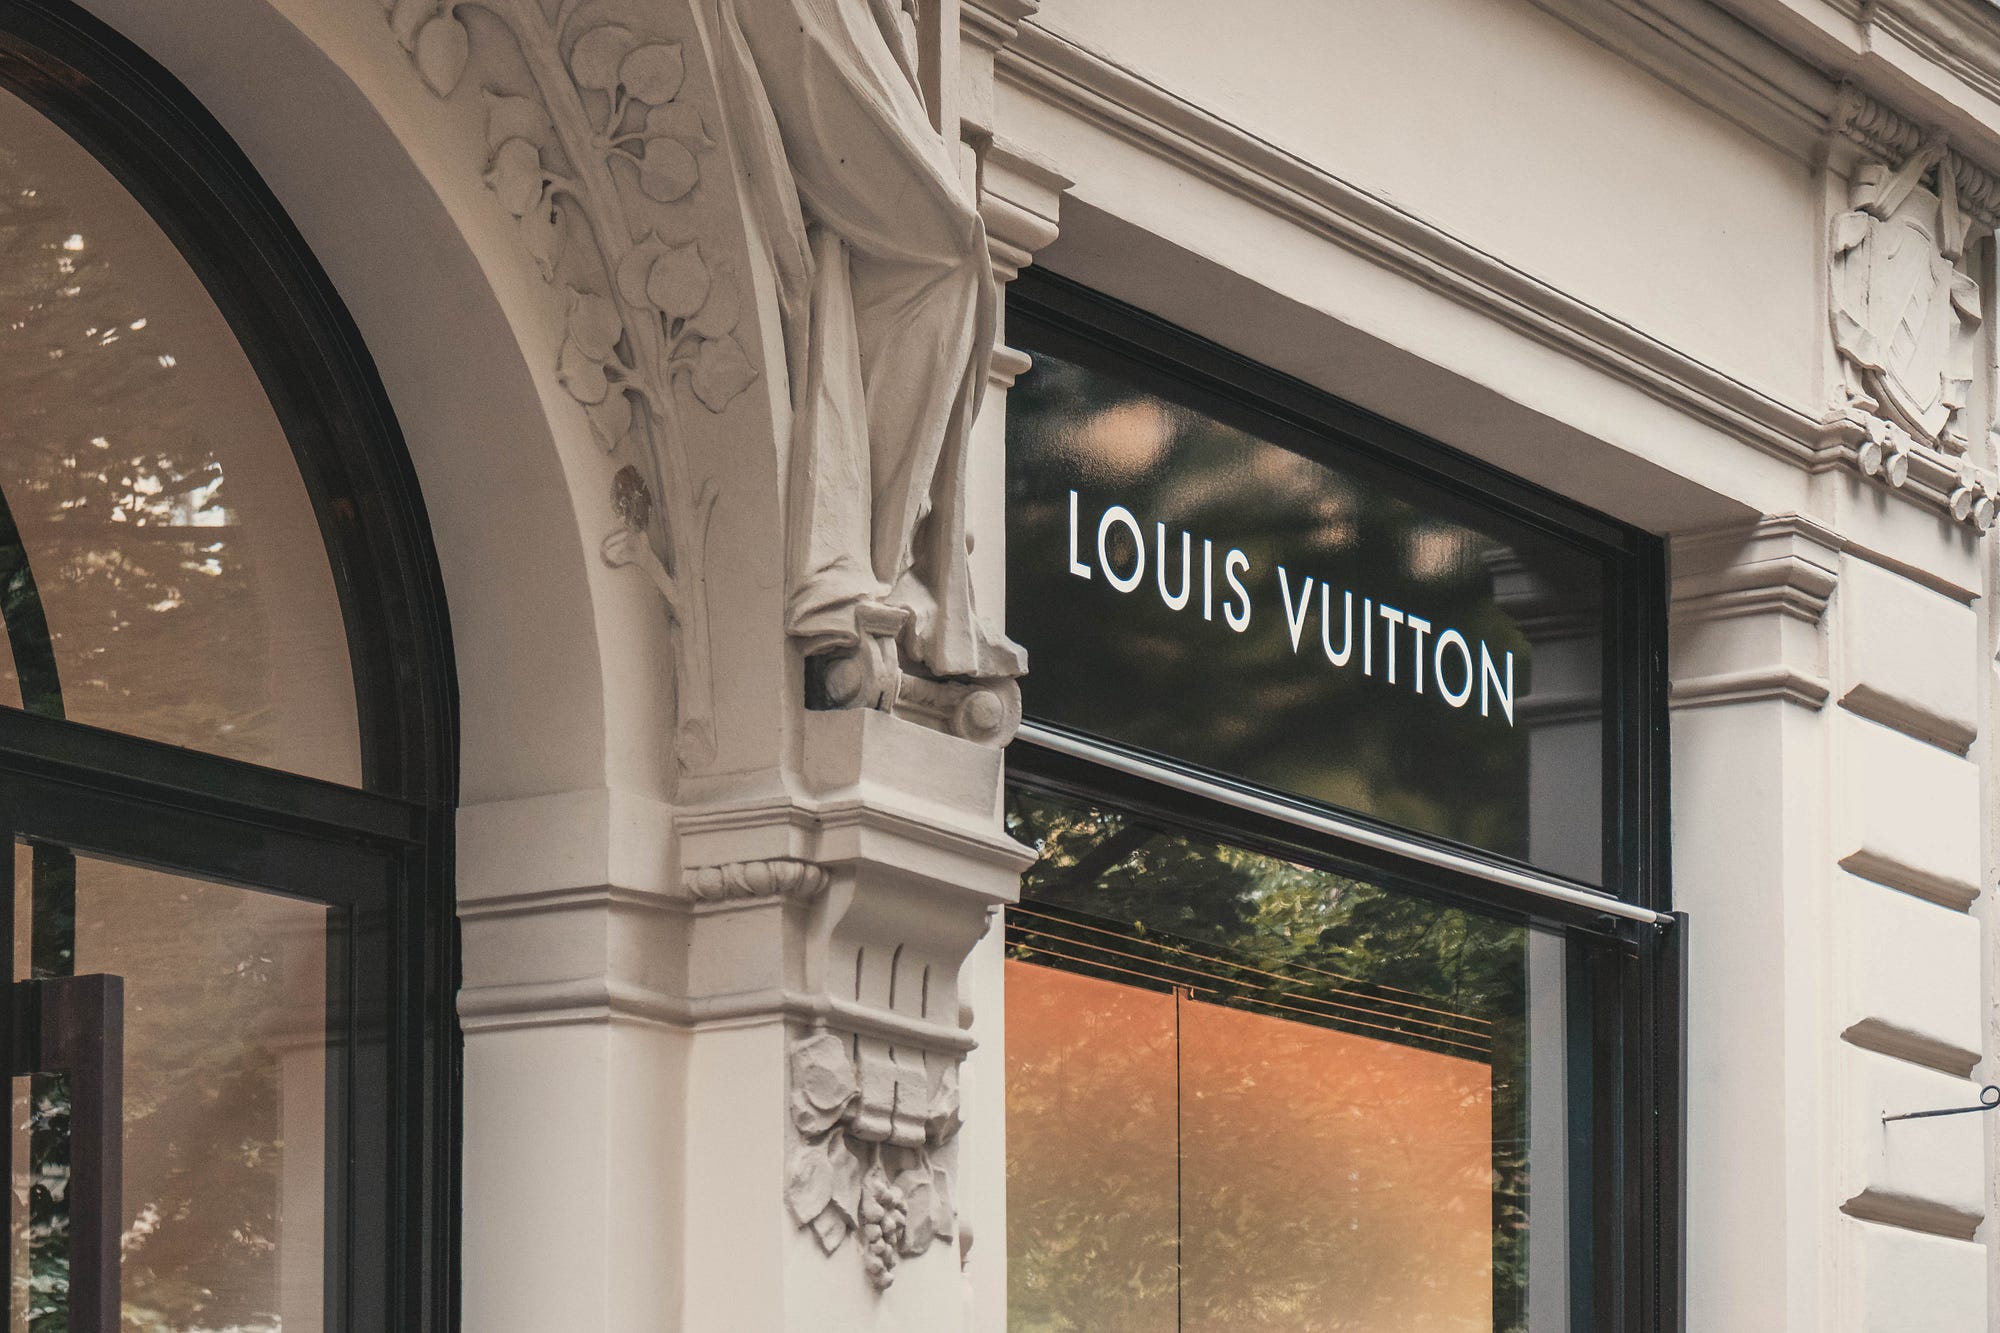 the ultimate handbag comparison: Louis Vuitton Neverfull GM versus Cel